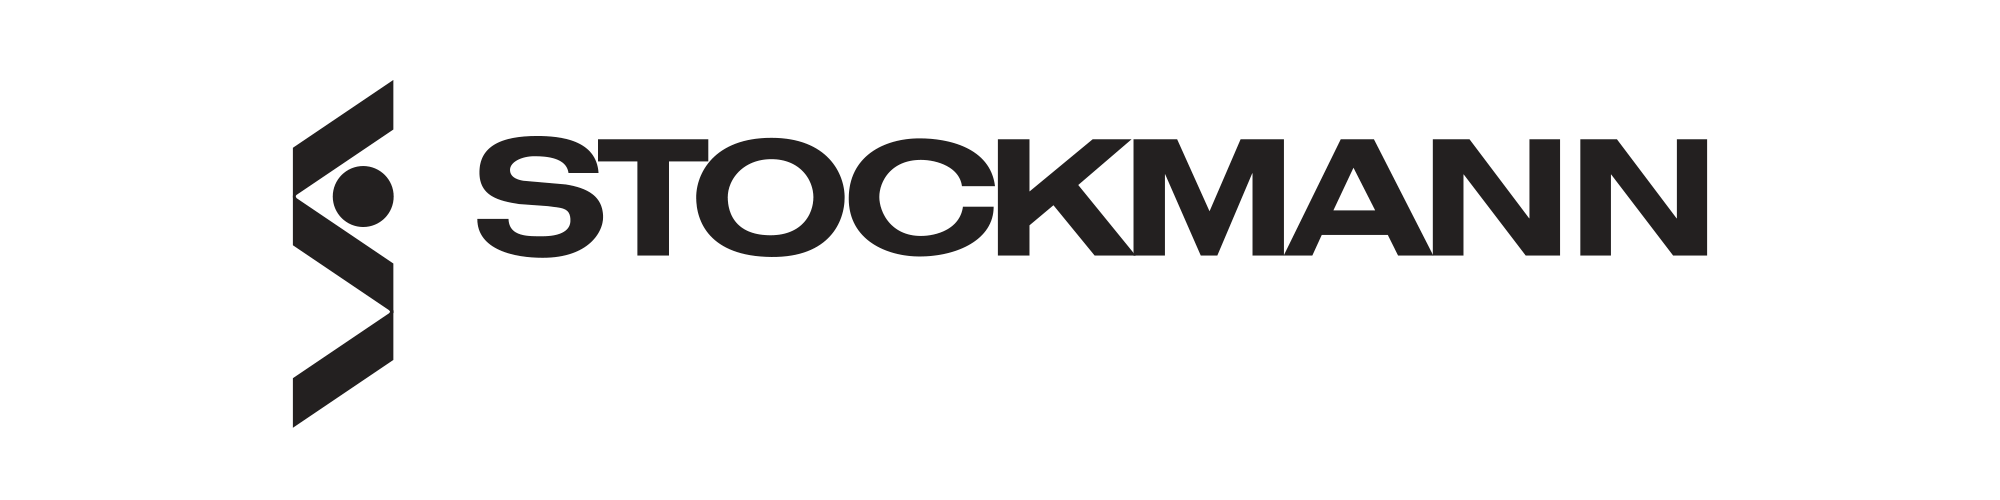 logo_stockmann